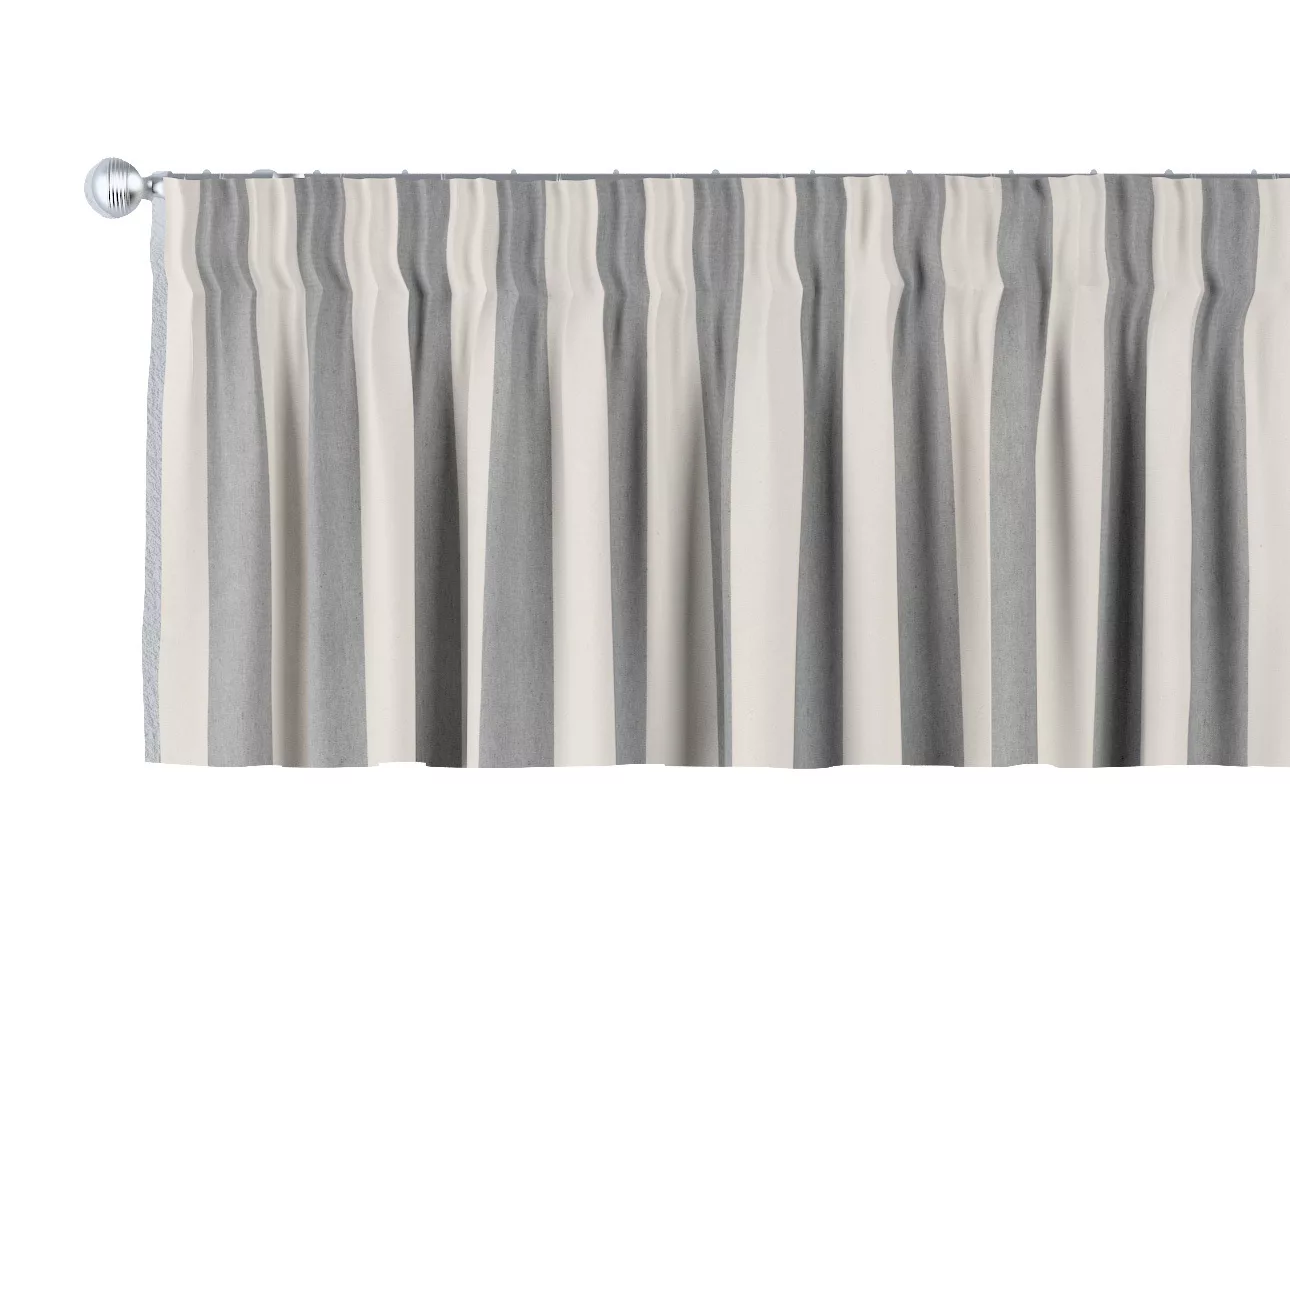 Kurzgardine mit Kräuselband, weiß-grau, 130 x 40 cm, Quadro (143-91) günstig online kaufen